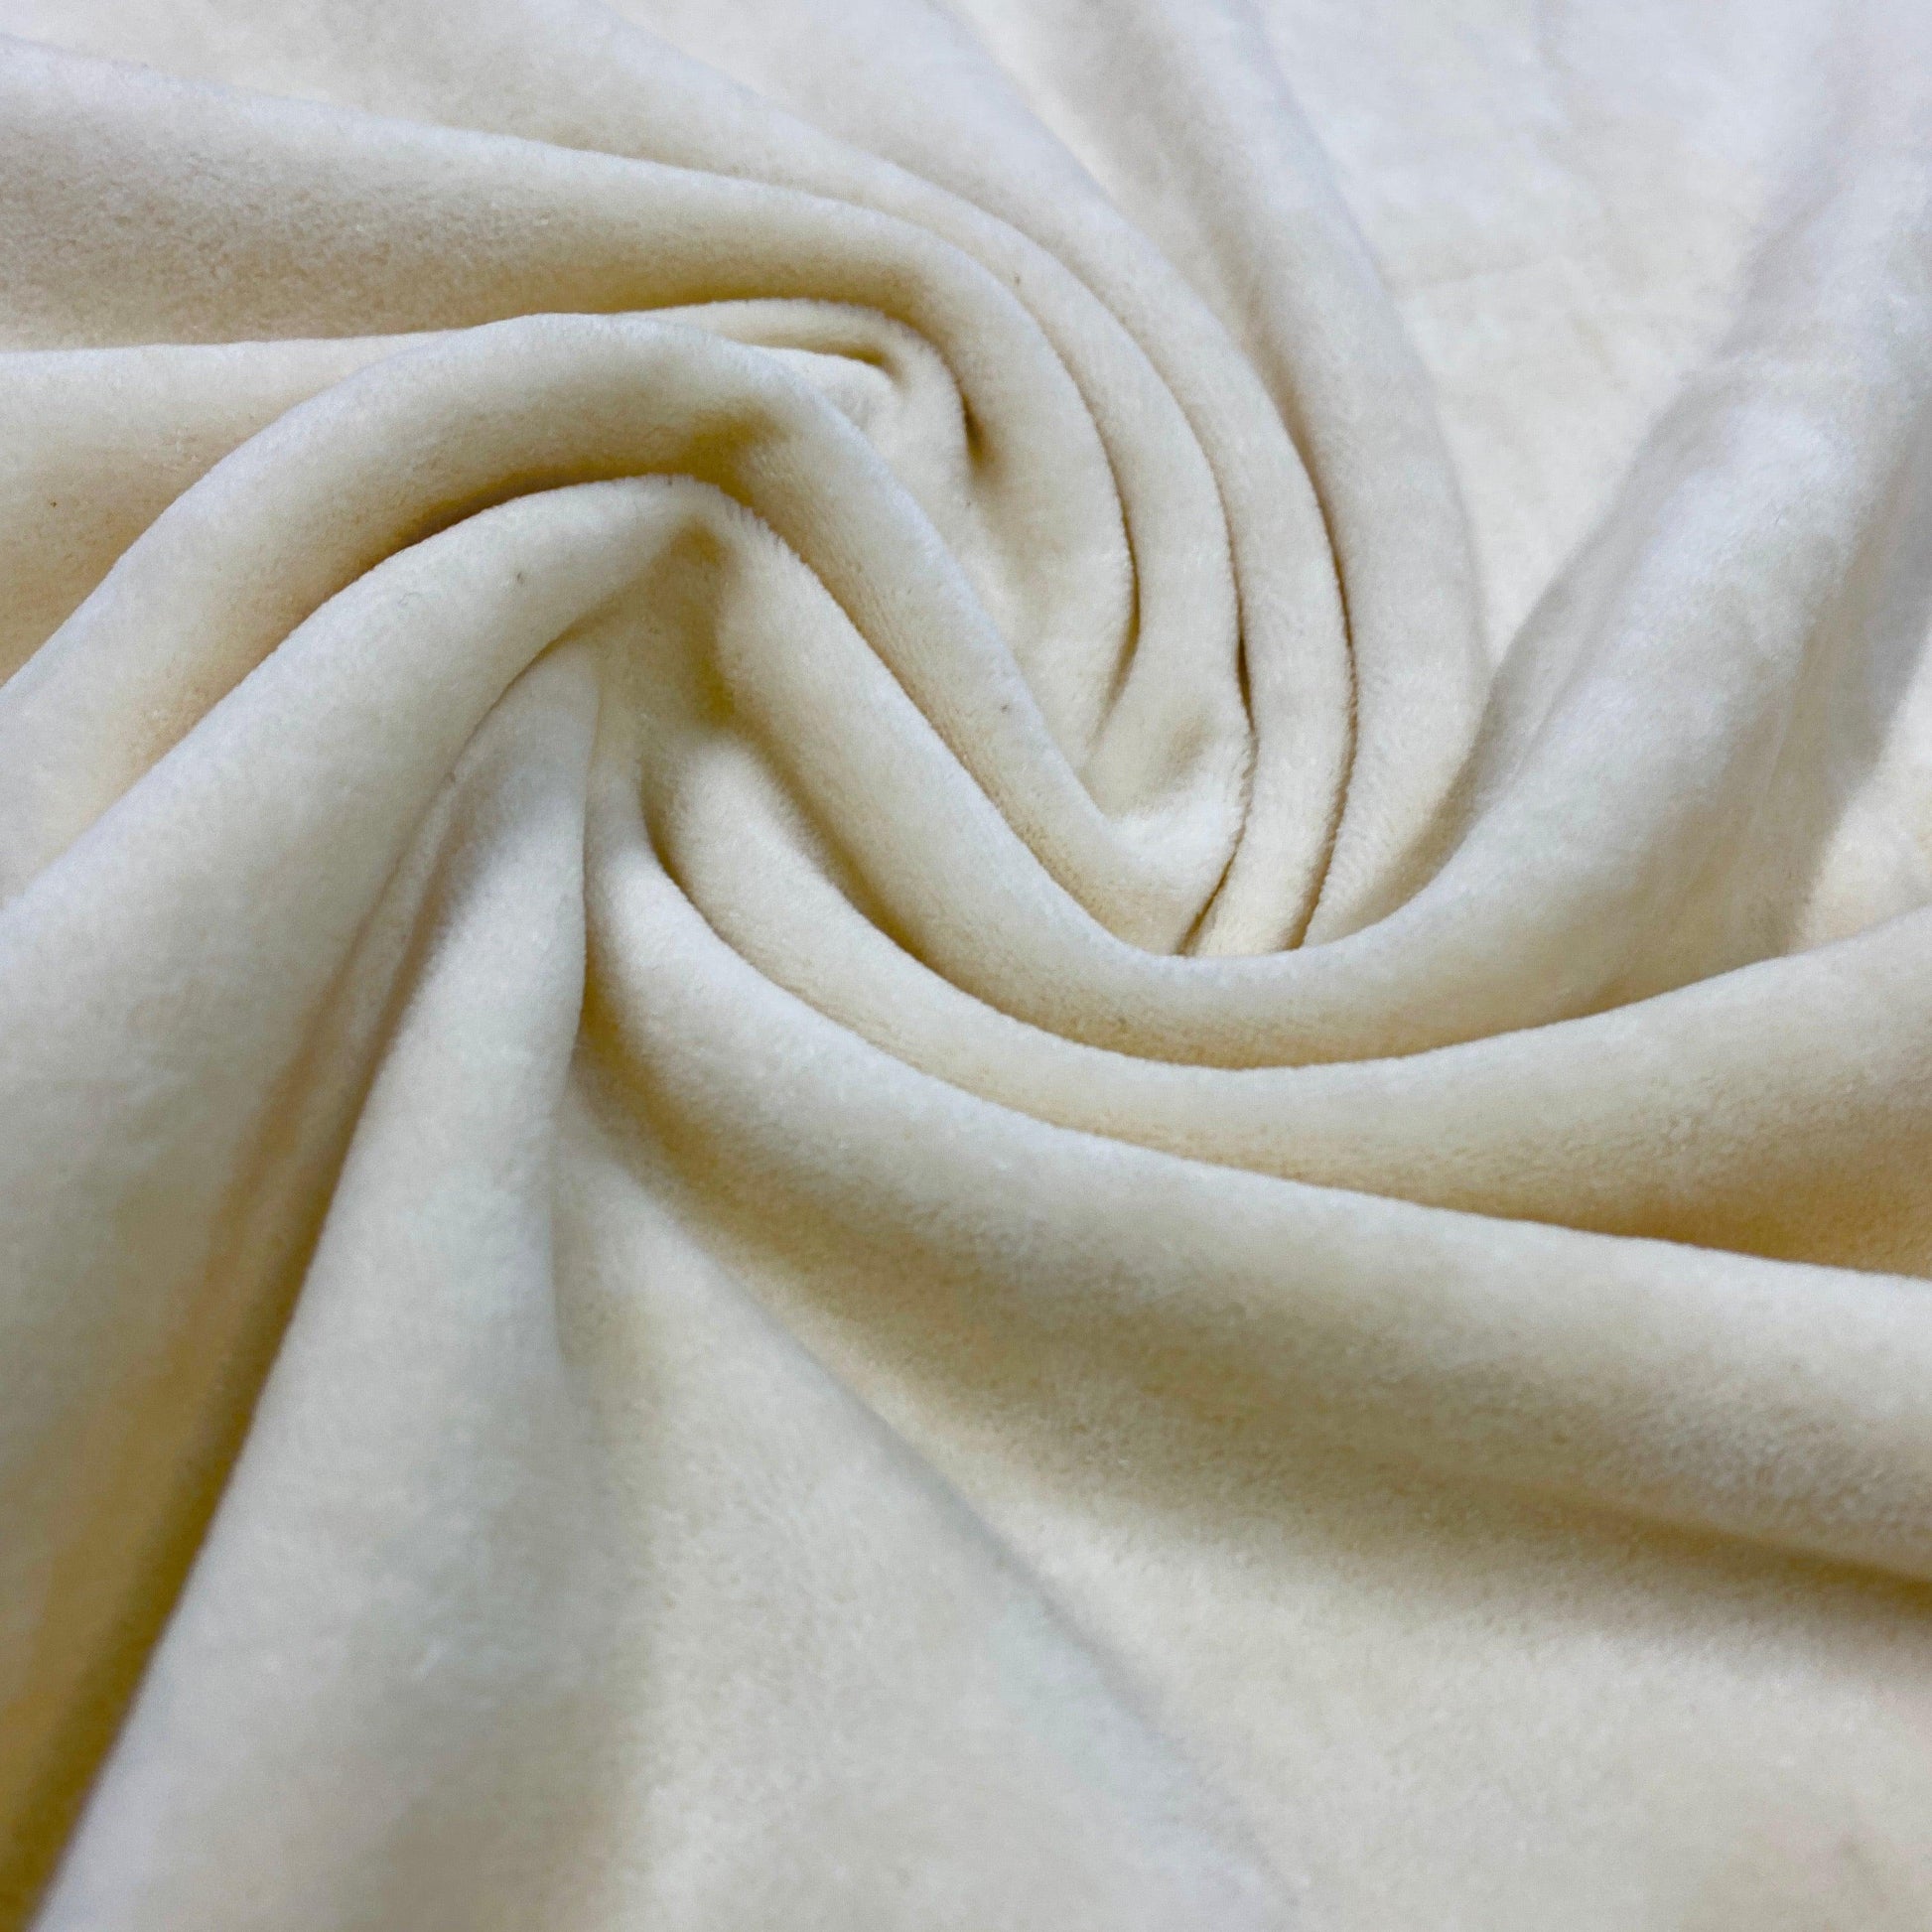 Organic Cotton Velour Fabric USA, $20.63/yd, 15 Yards - Nature's Fabrics